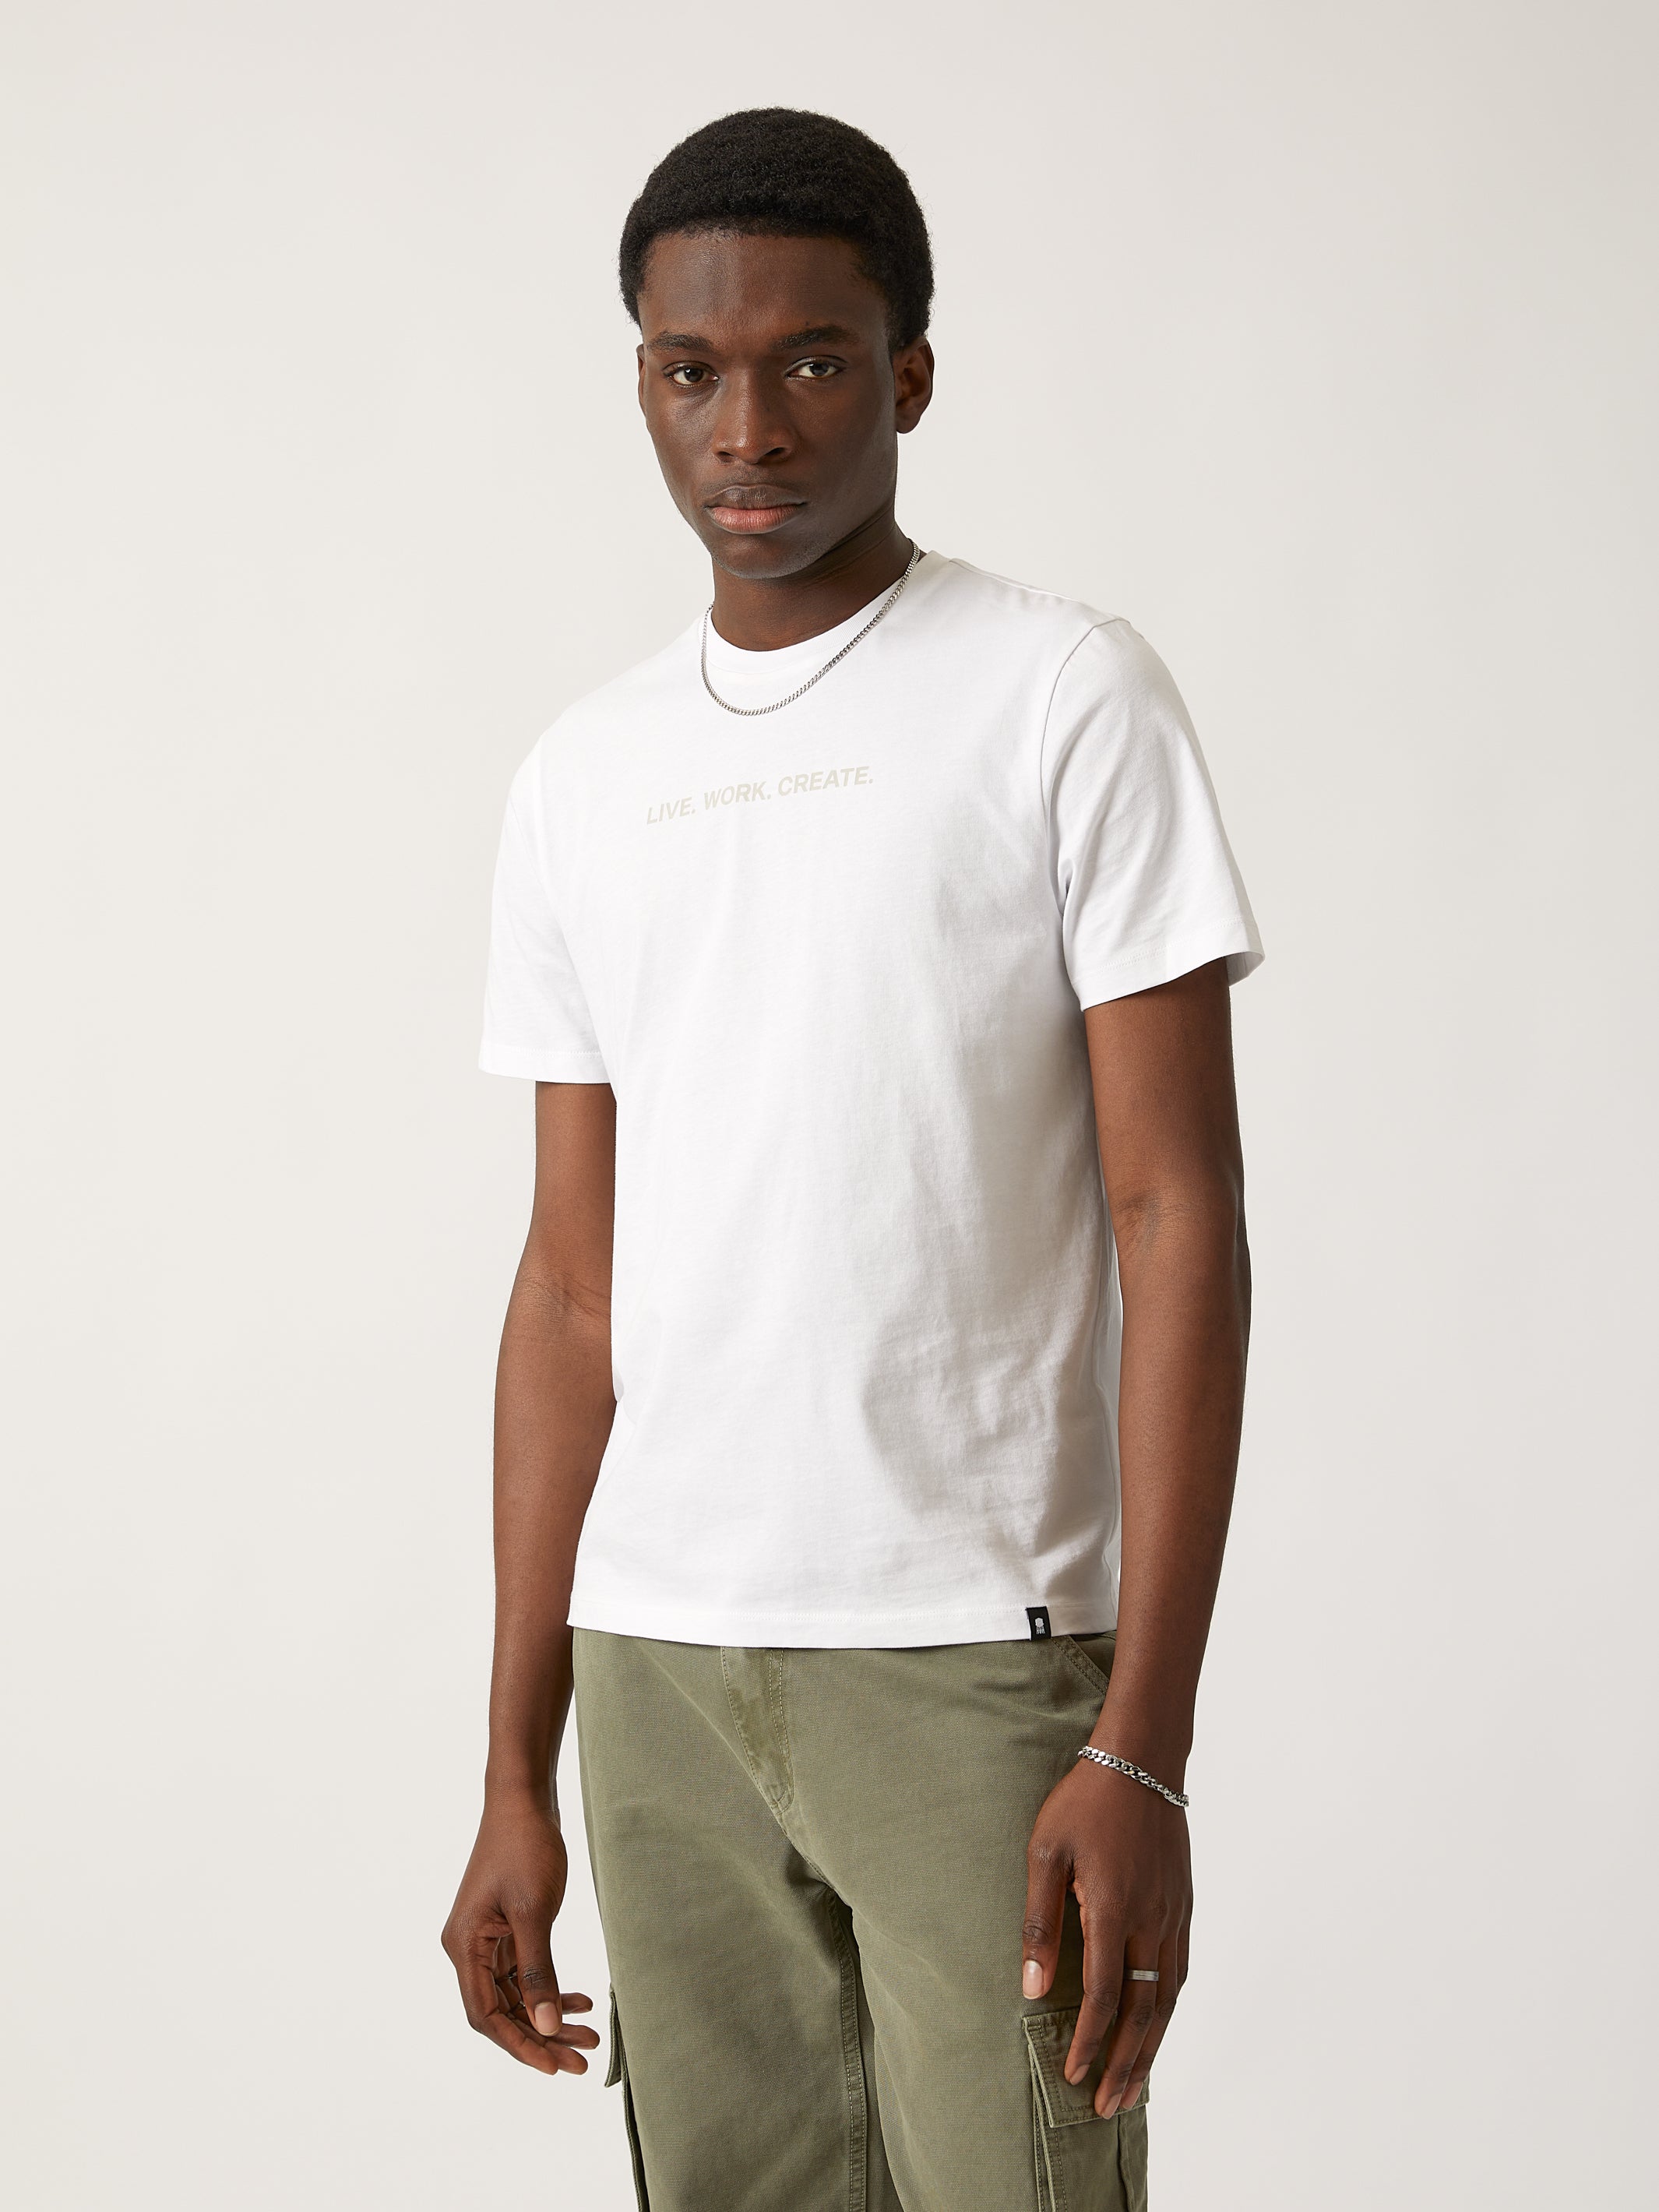 Men's Brooklyn Industries Live Work Create T-shirt in White - BROOKLYN INDUSTRIES